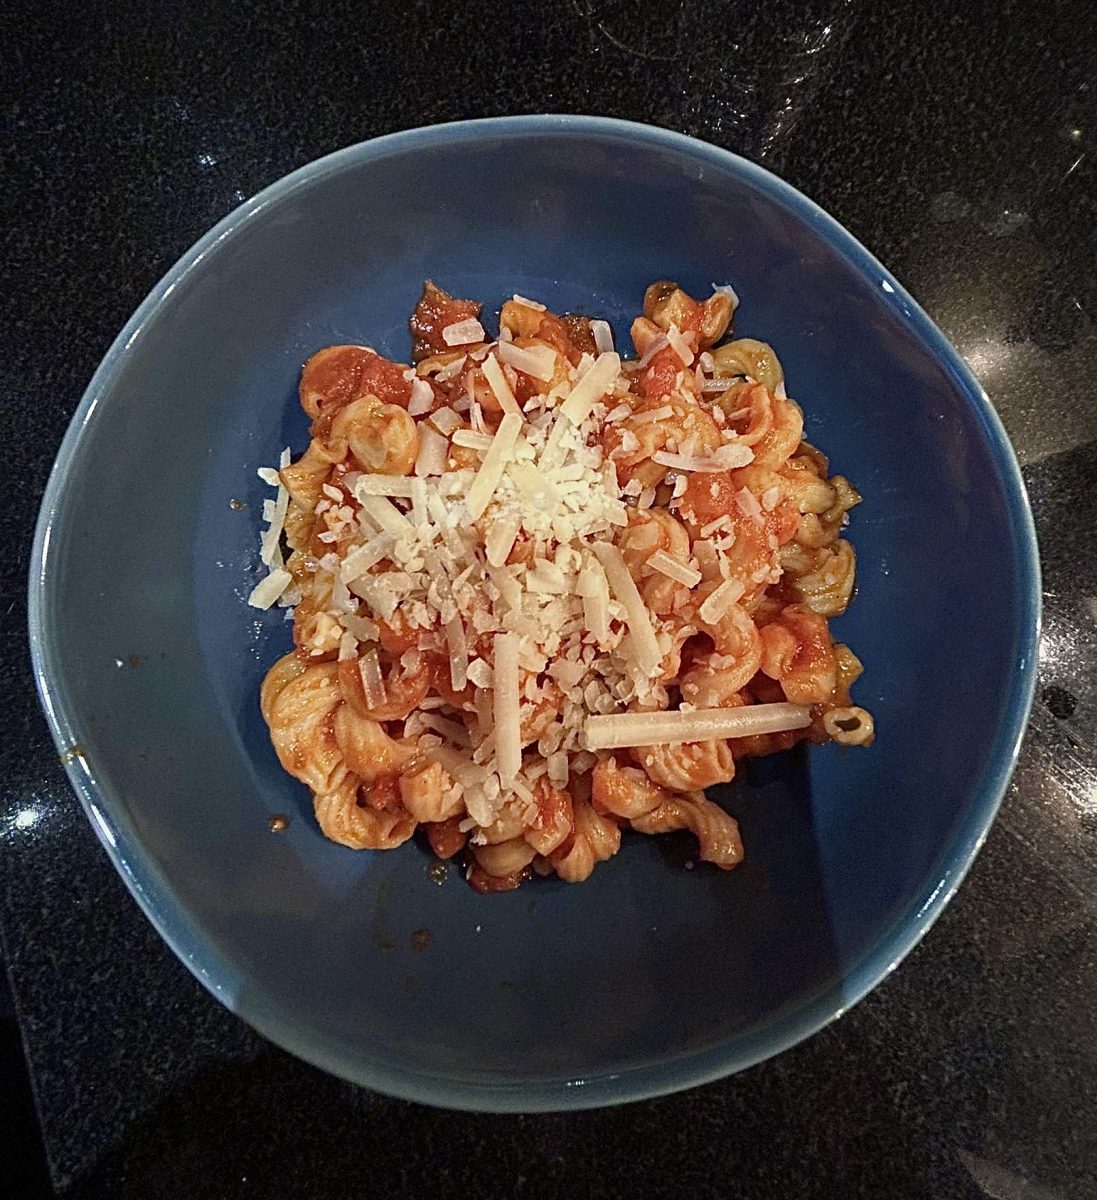 Homemade+pasta+with+extra+marinara+and+extra+parmesan+cheese